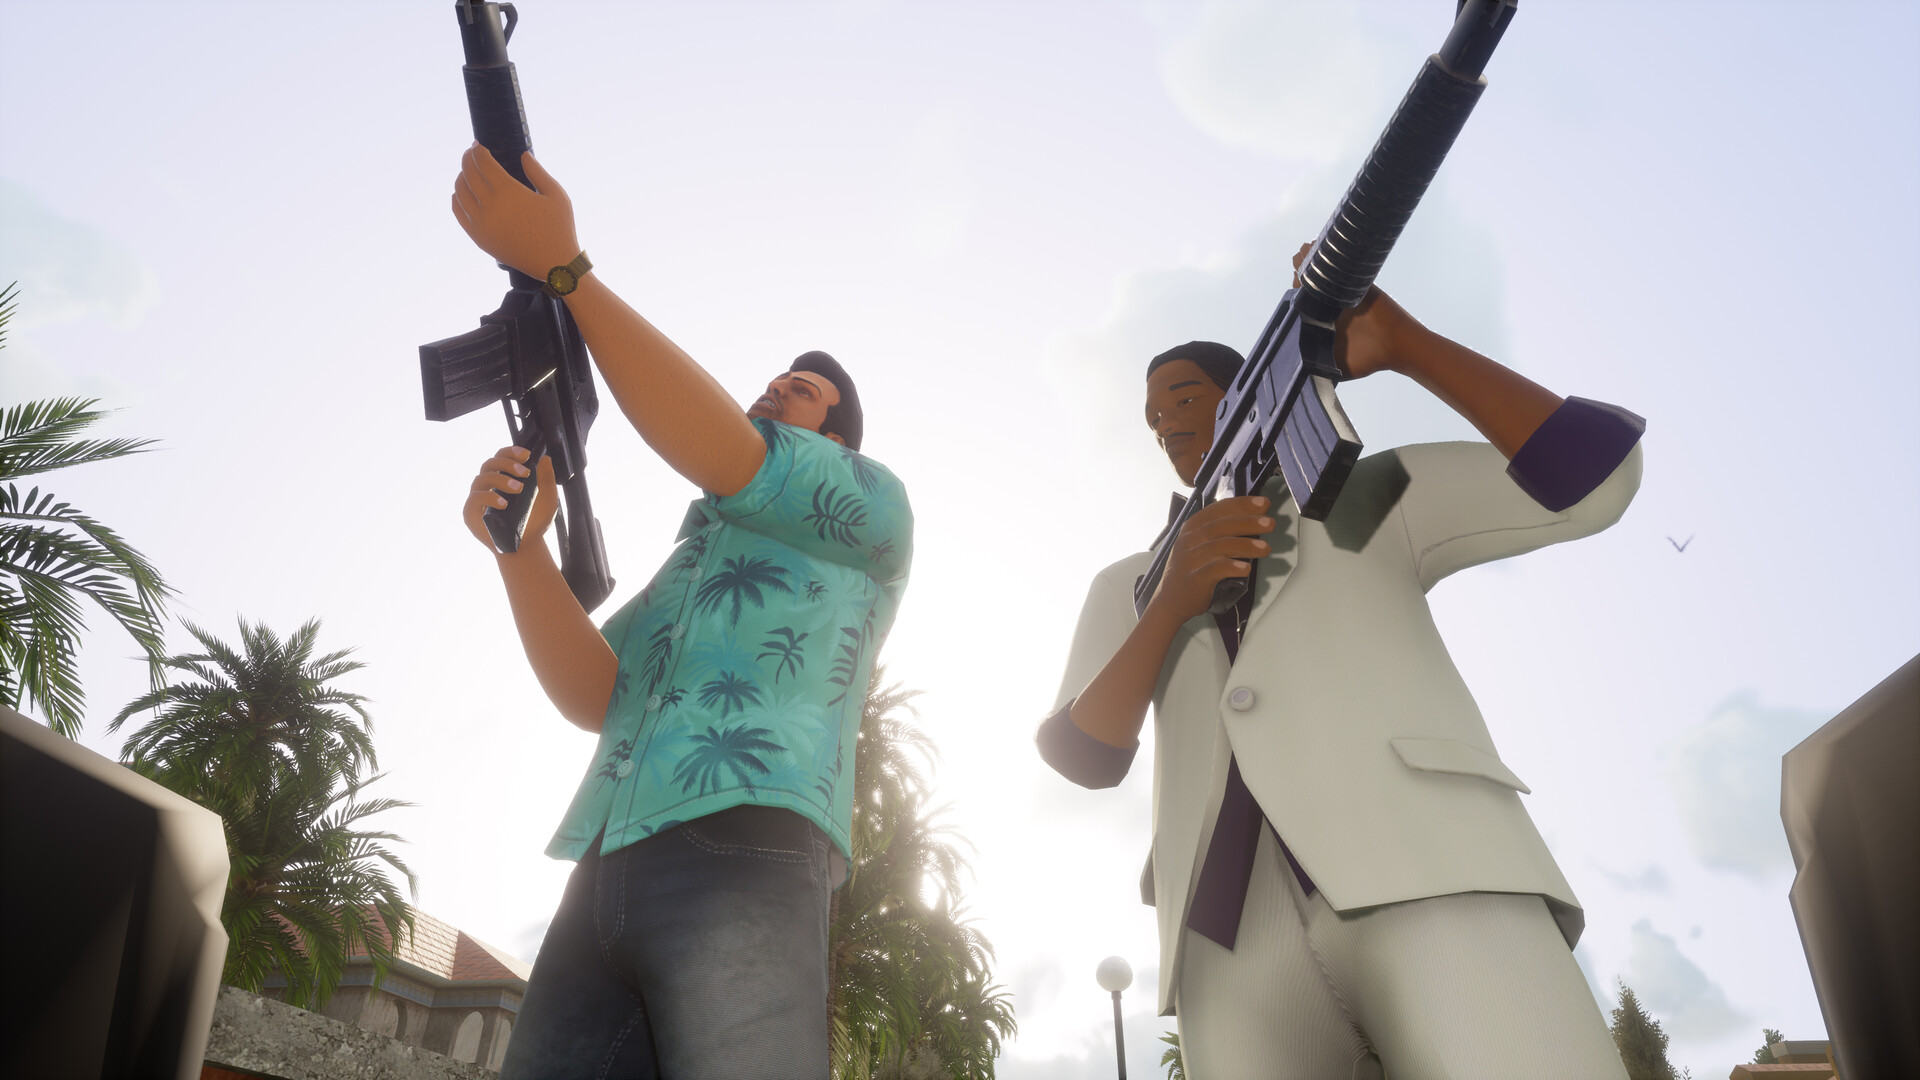 Grand Theft Auto: Vice City – The Definitive Edition em breve